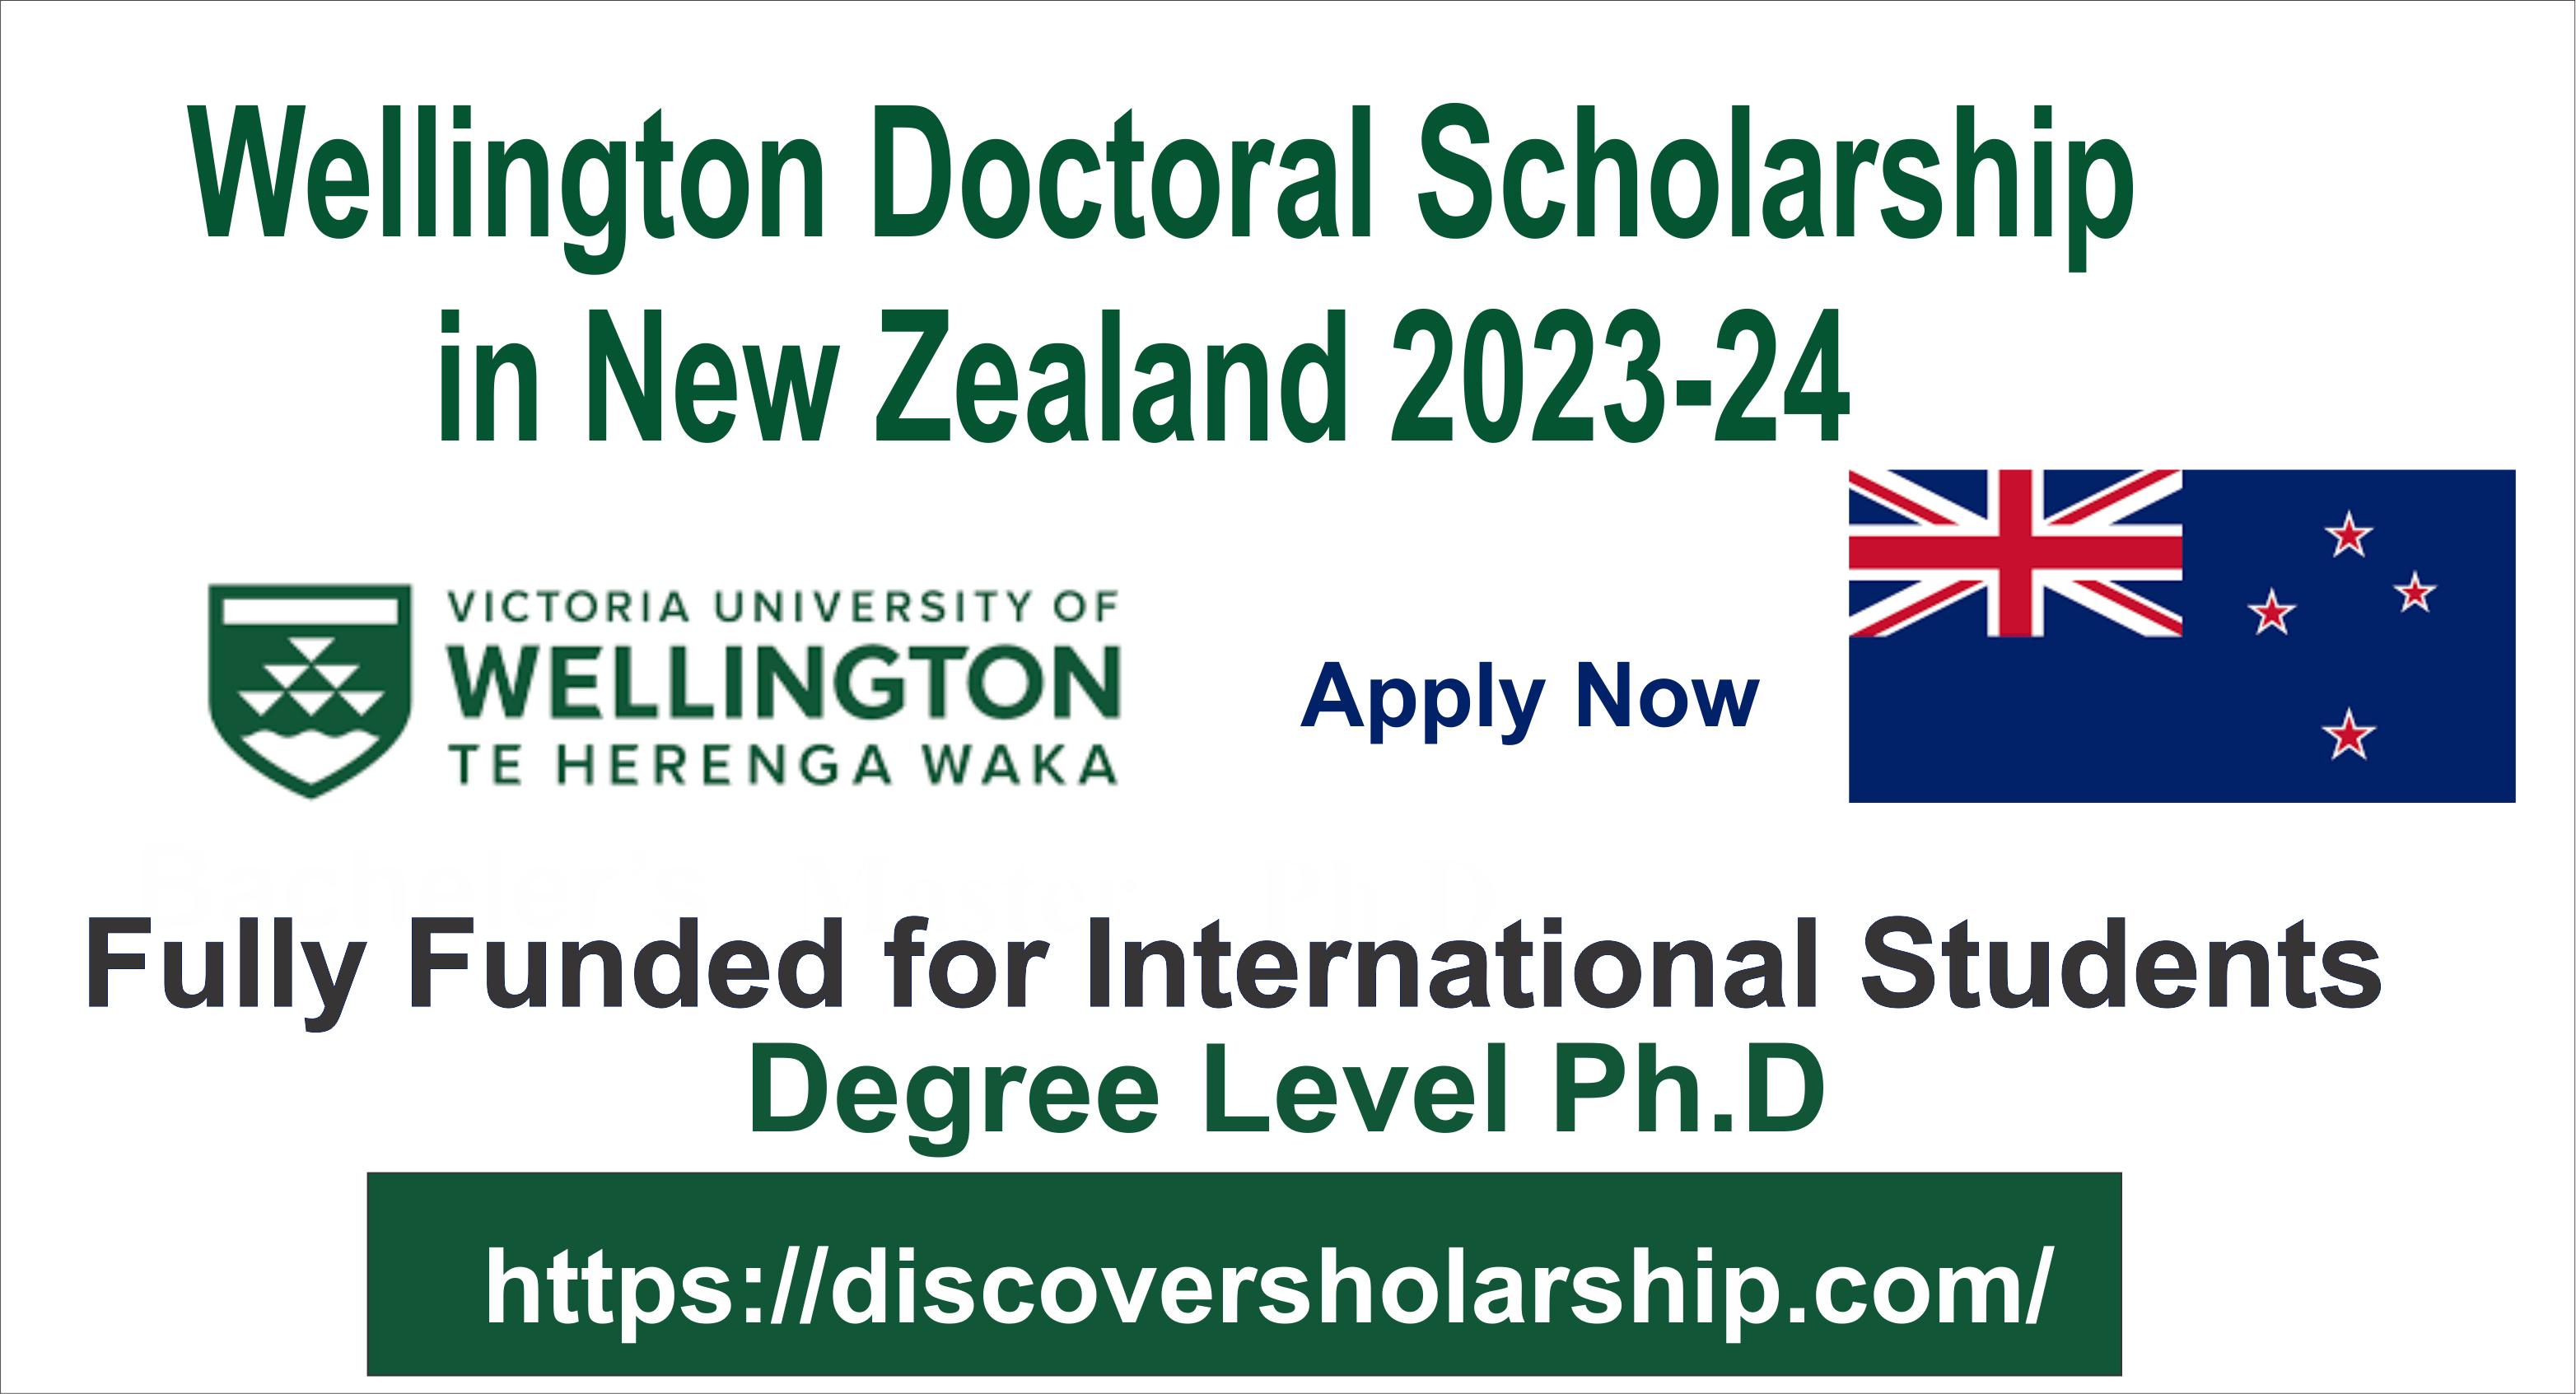 Wellington Doctoral Scholarship in New Zealand 2023-24